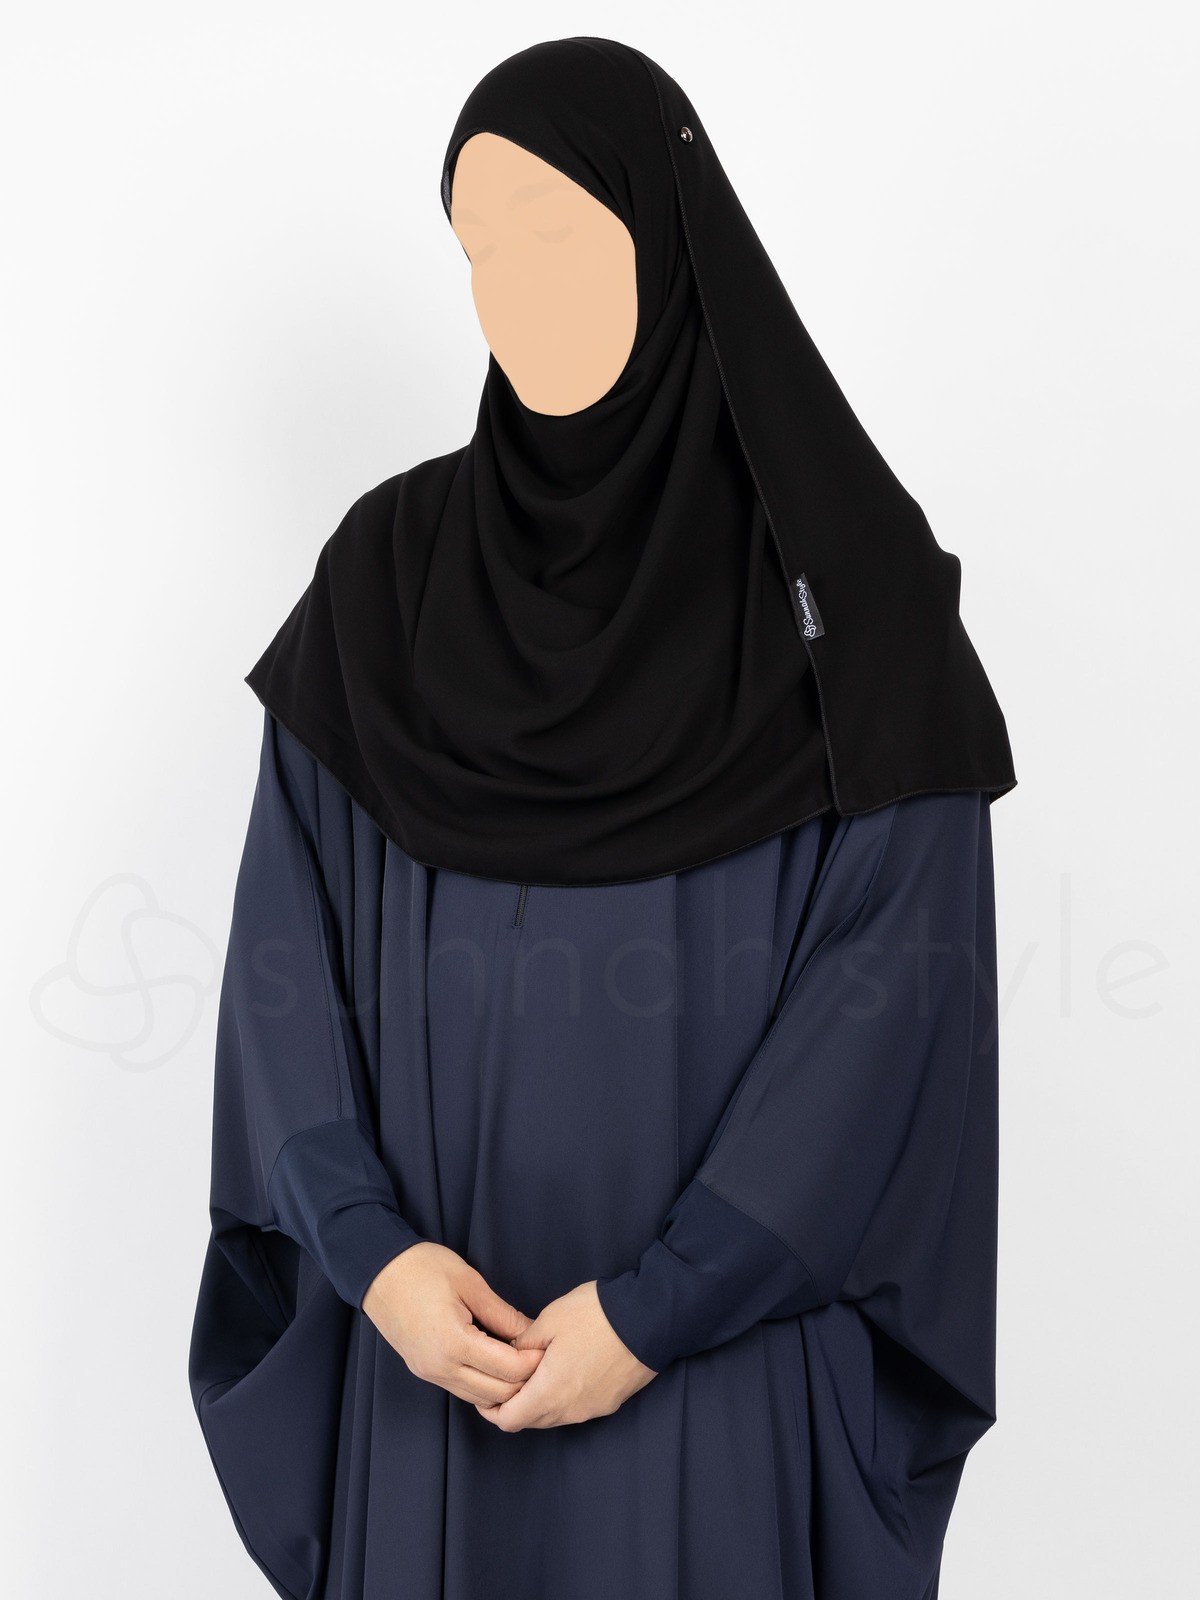 Sunnah Style - Essentials Shayla - Standard (Caramel)